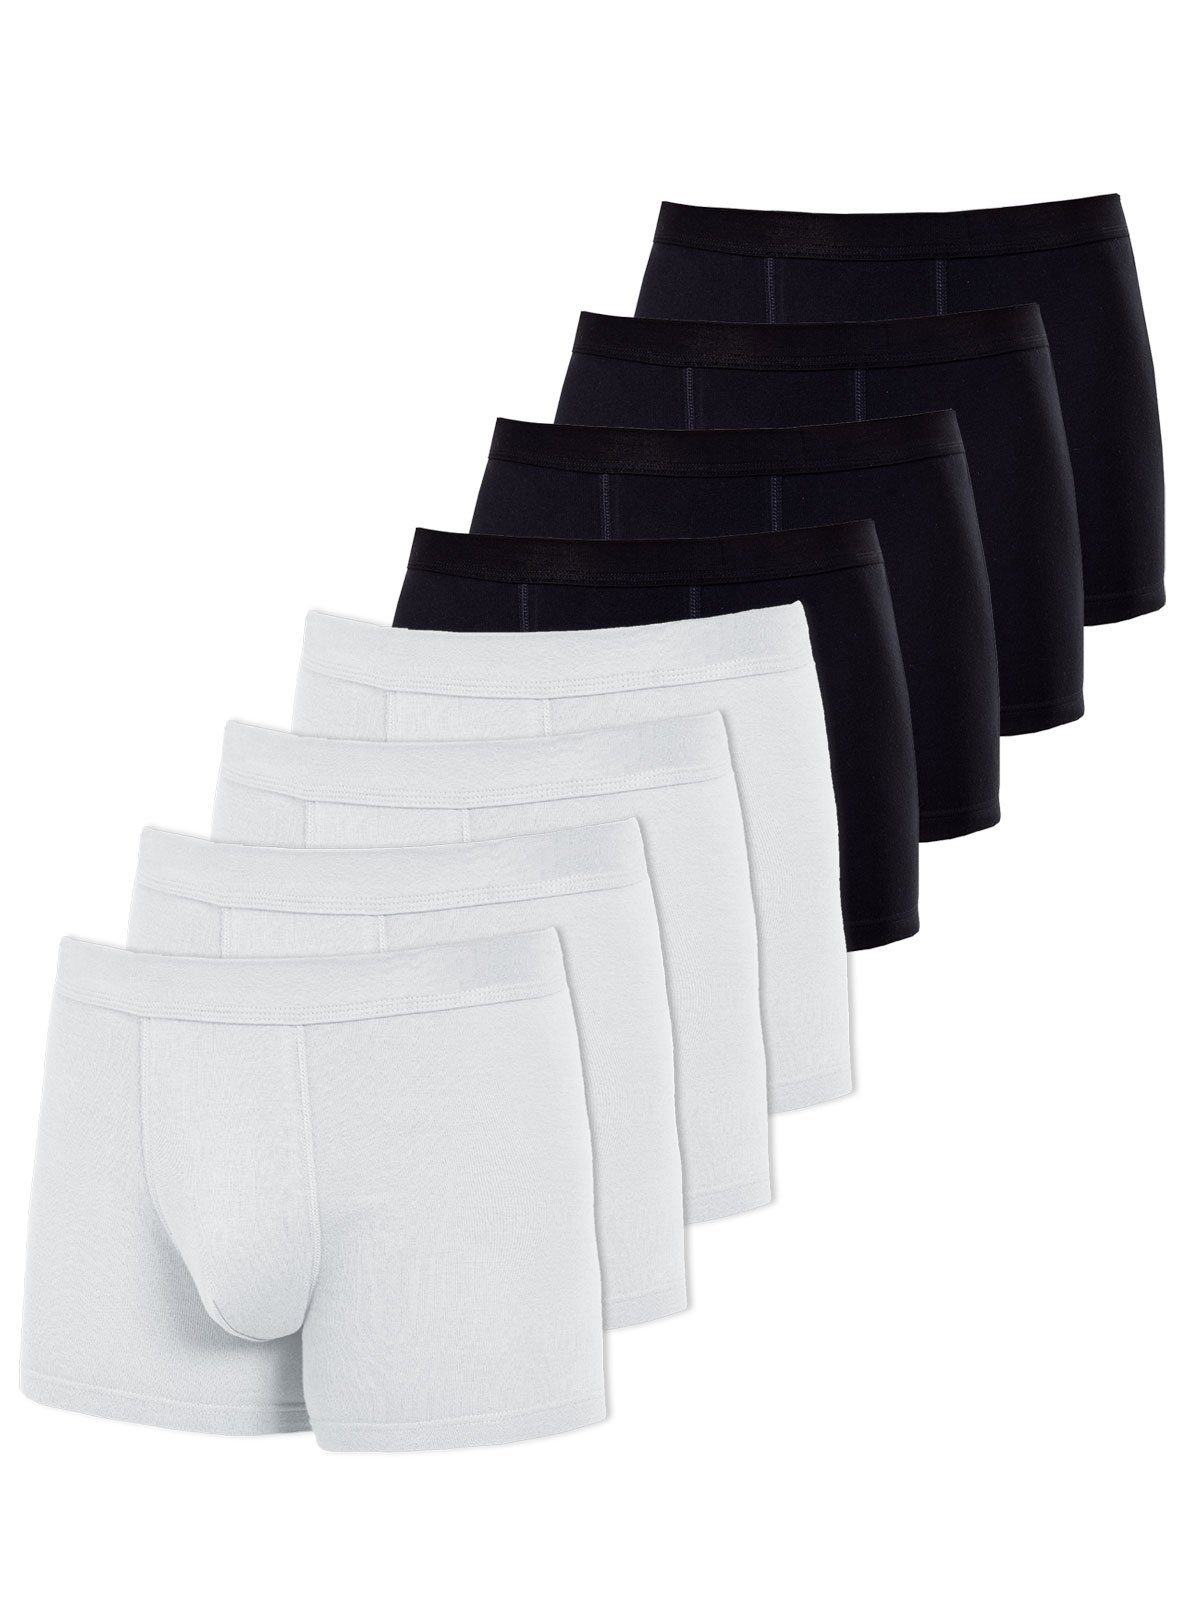 KUMPF Retro Pants 8er Sparpack Herren Pants Bio Cotton (Spar-Set, 8-St) - weiss schwarz